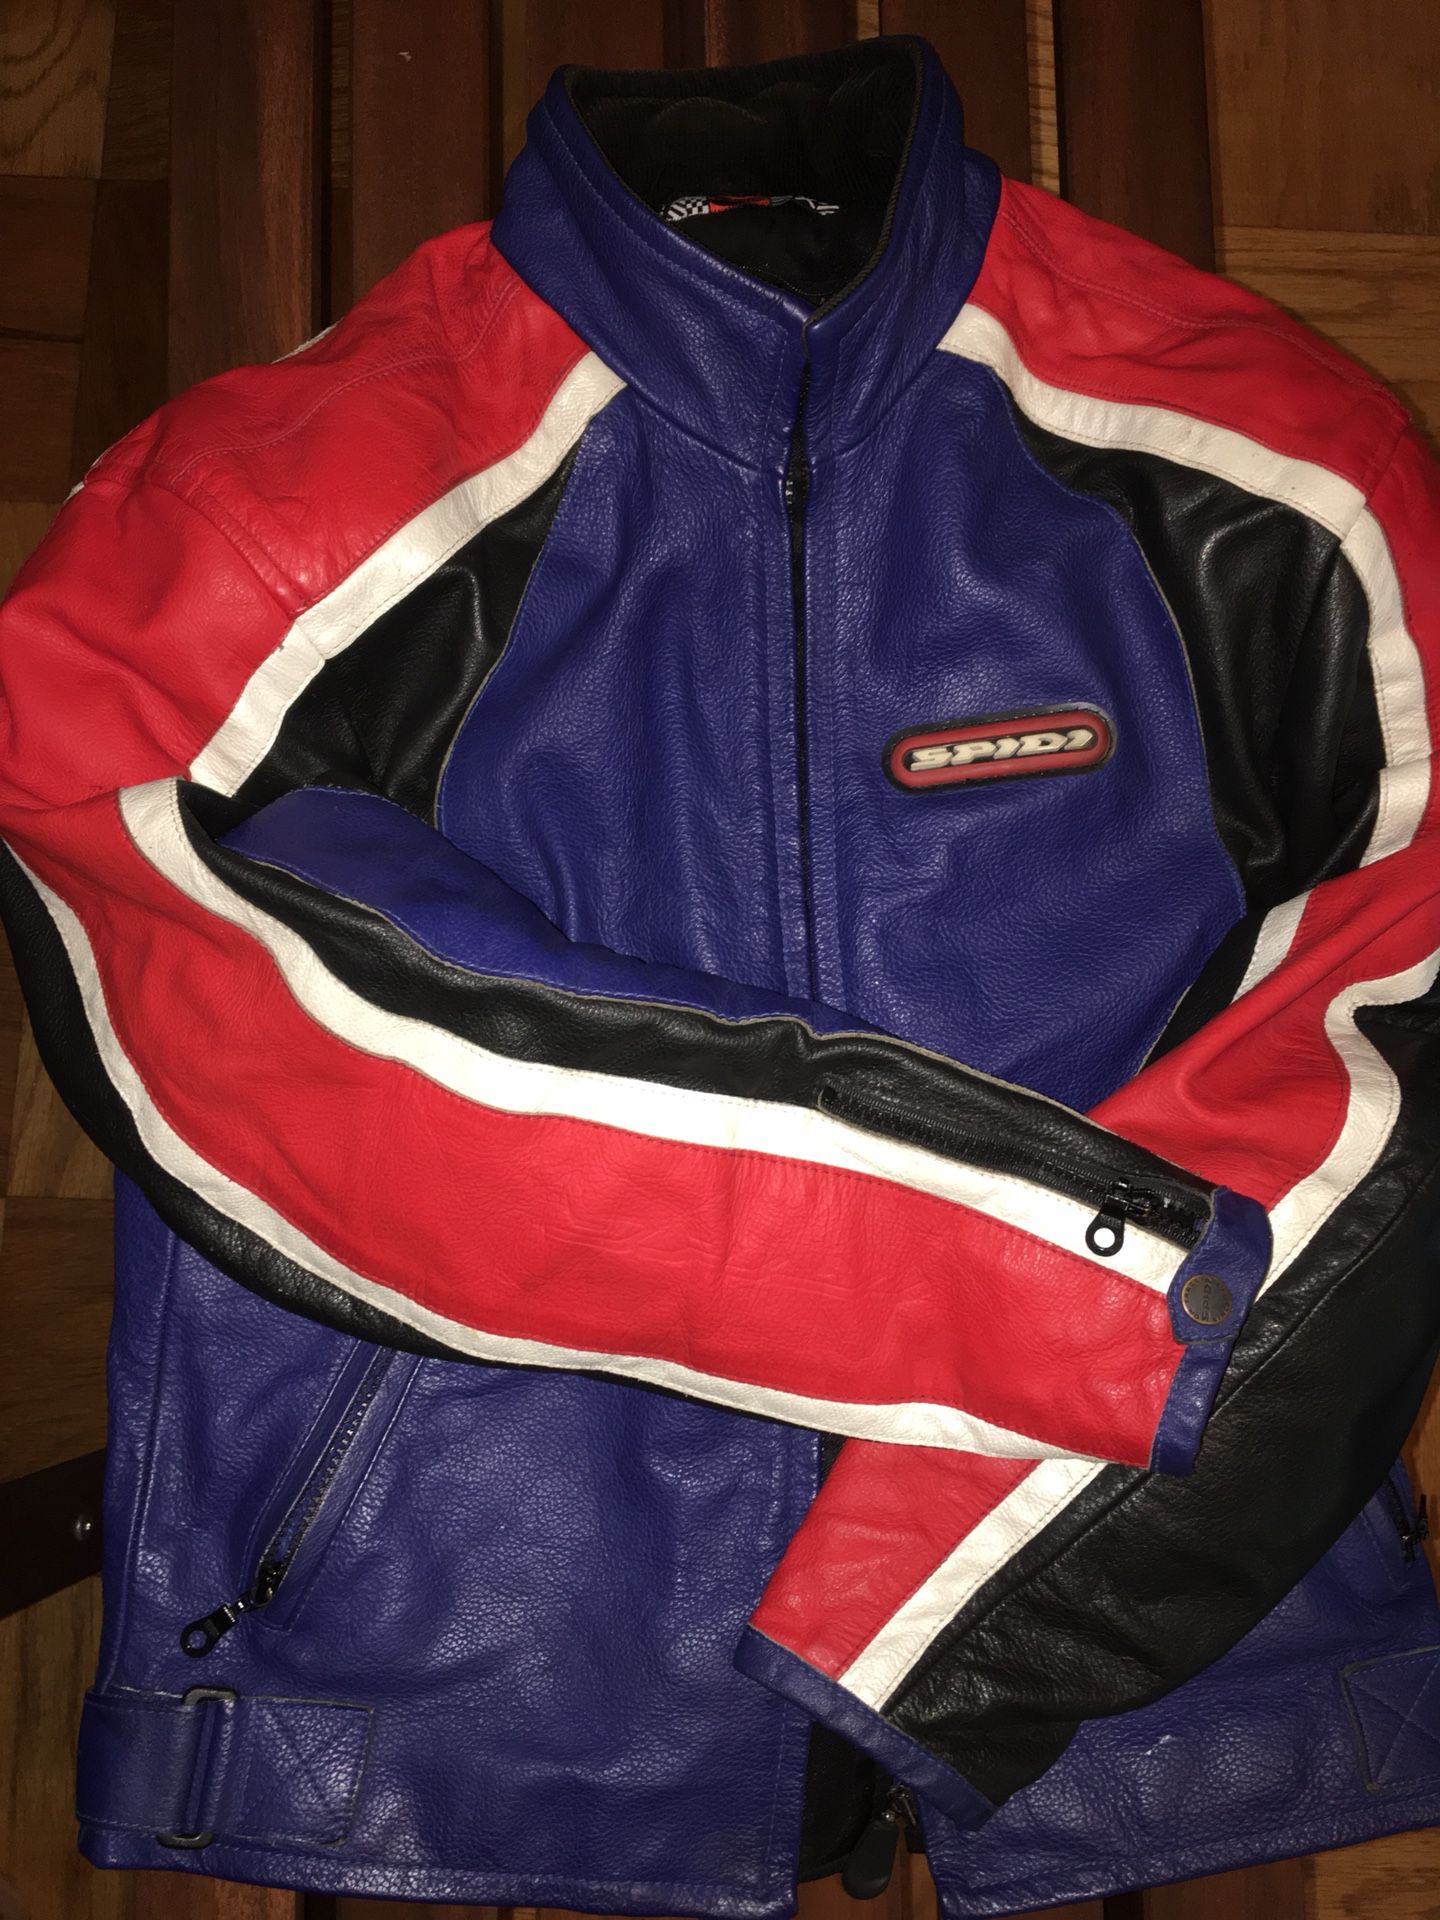 Spidi motorcycle jacket medium fits 40-42